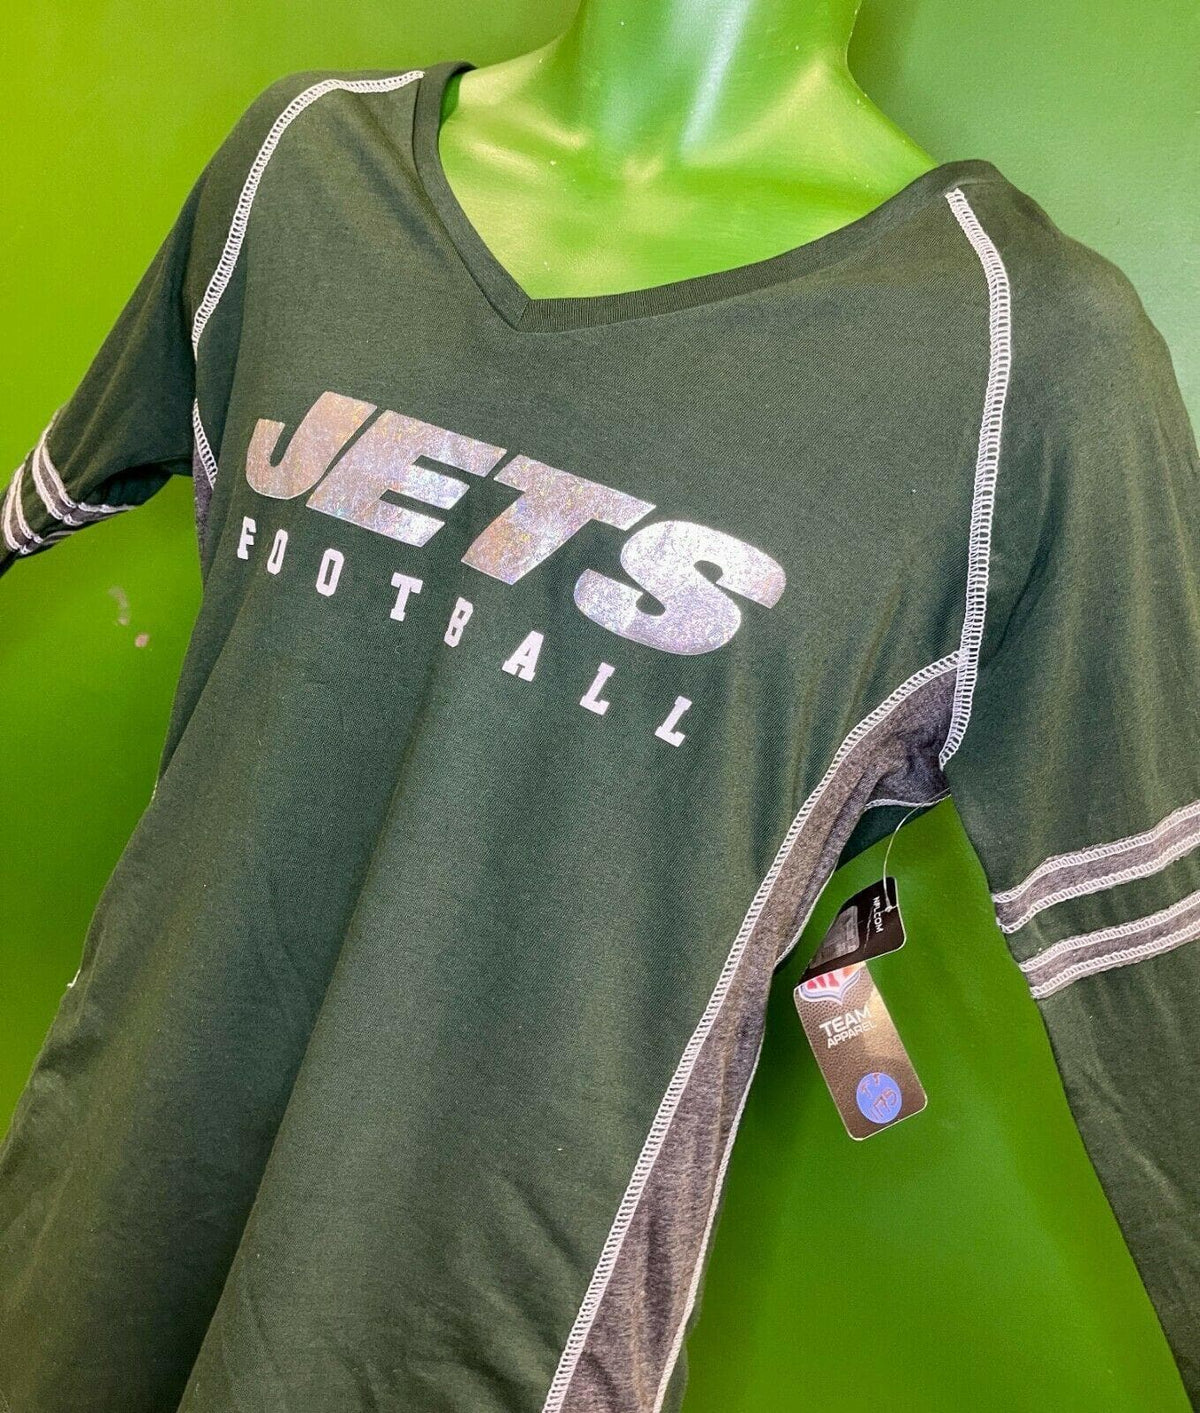 NFL New York Jets Majestic L-S Women's T-Shirt Women's XL NWT